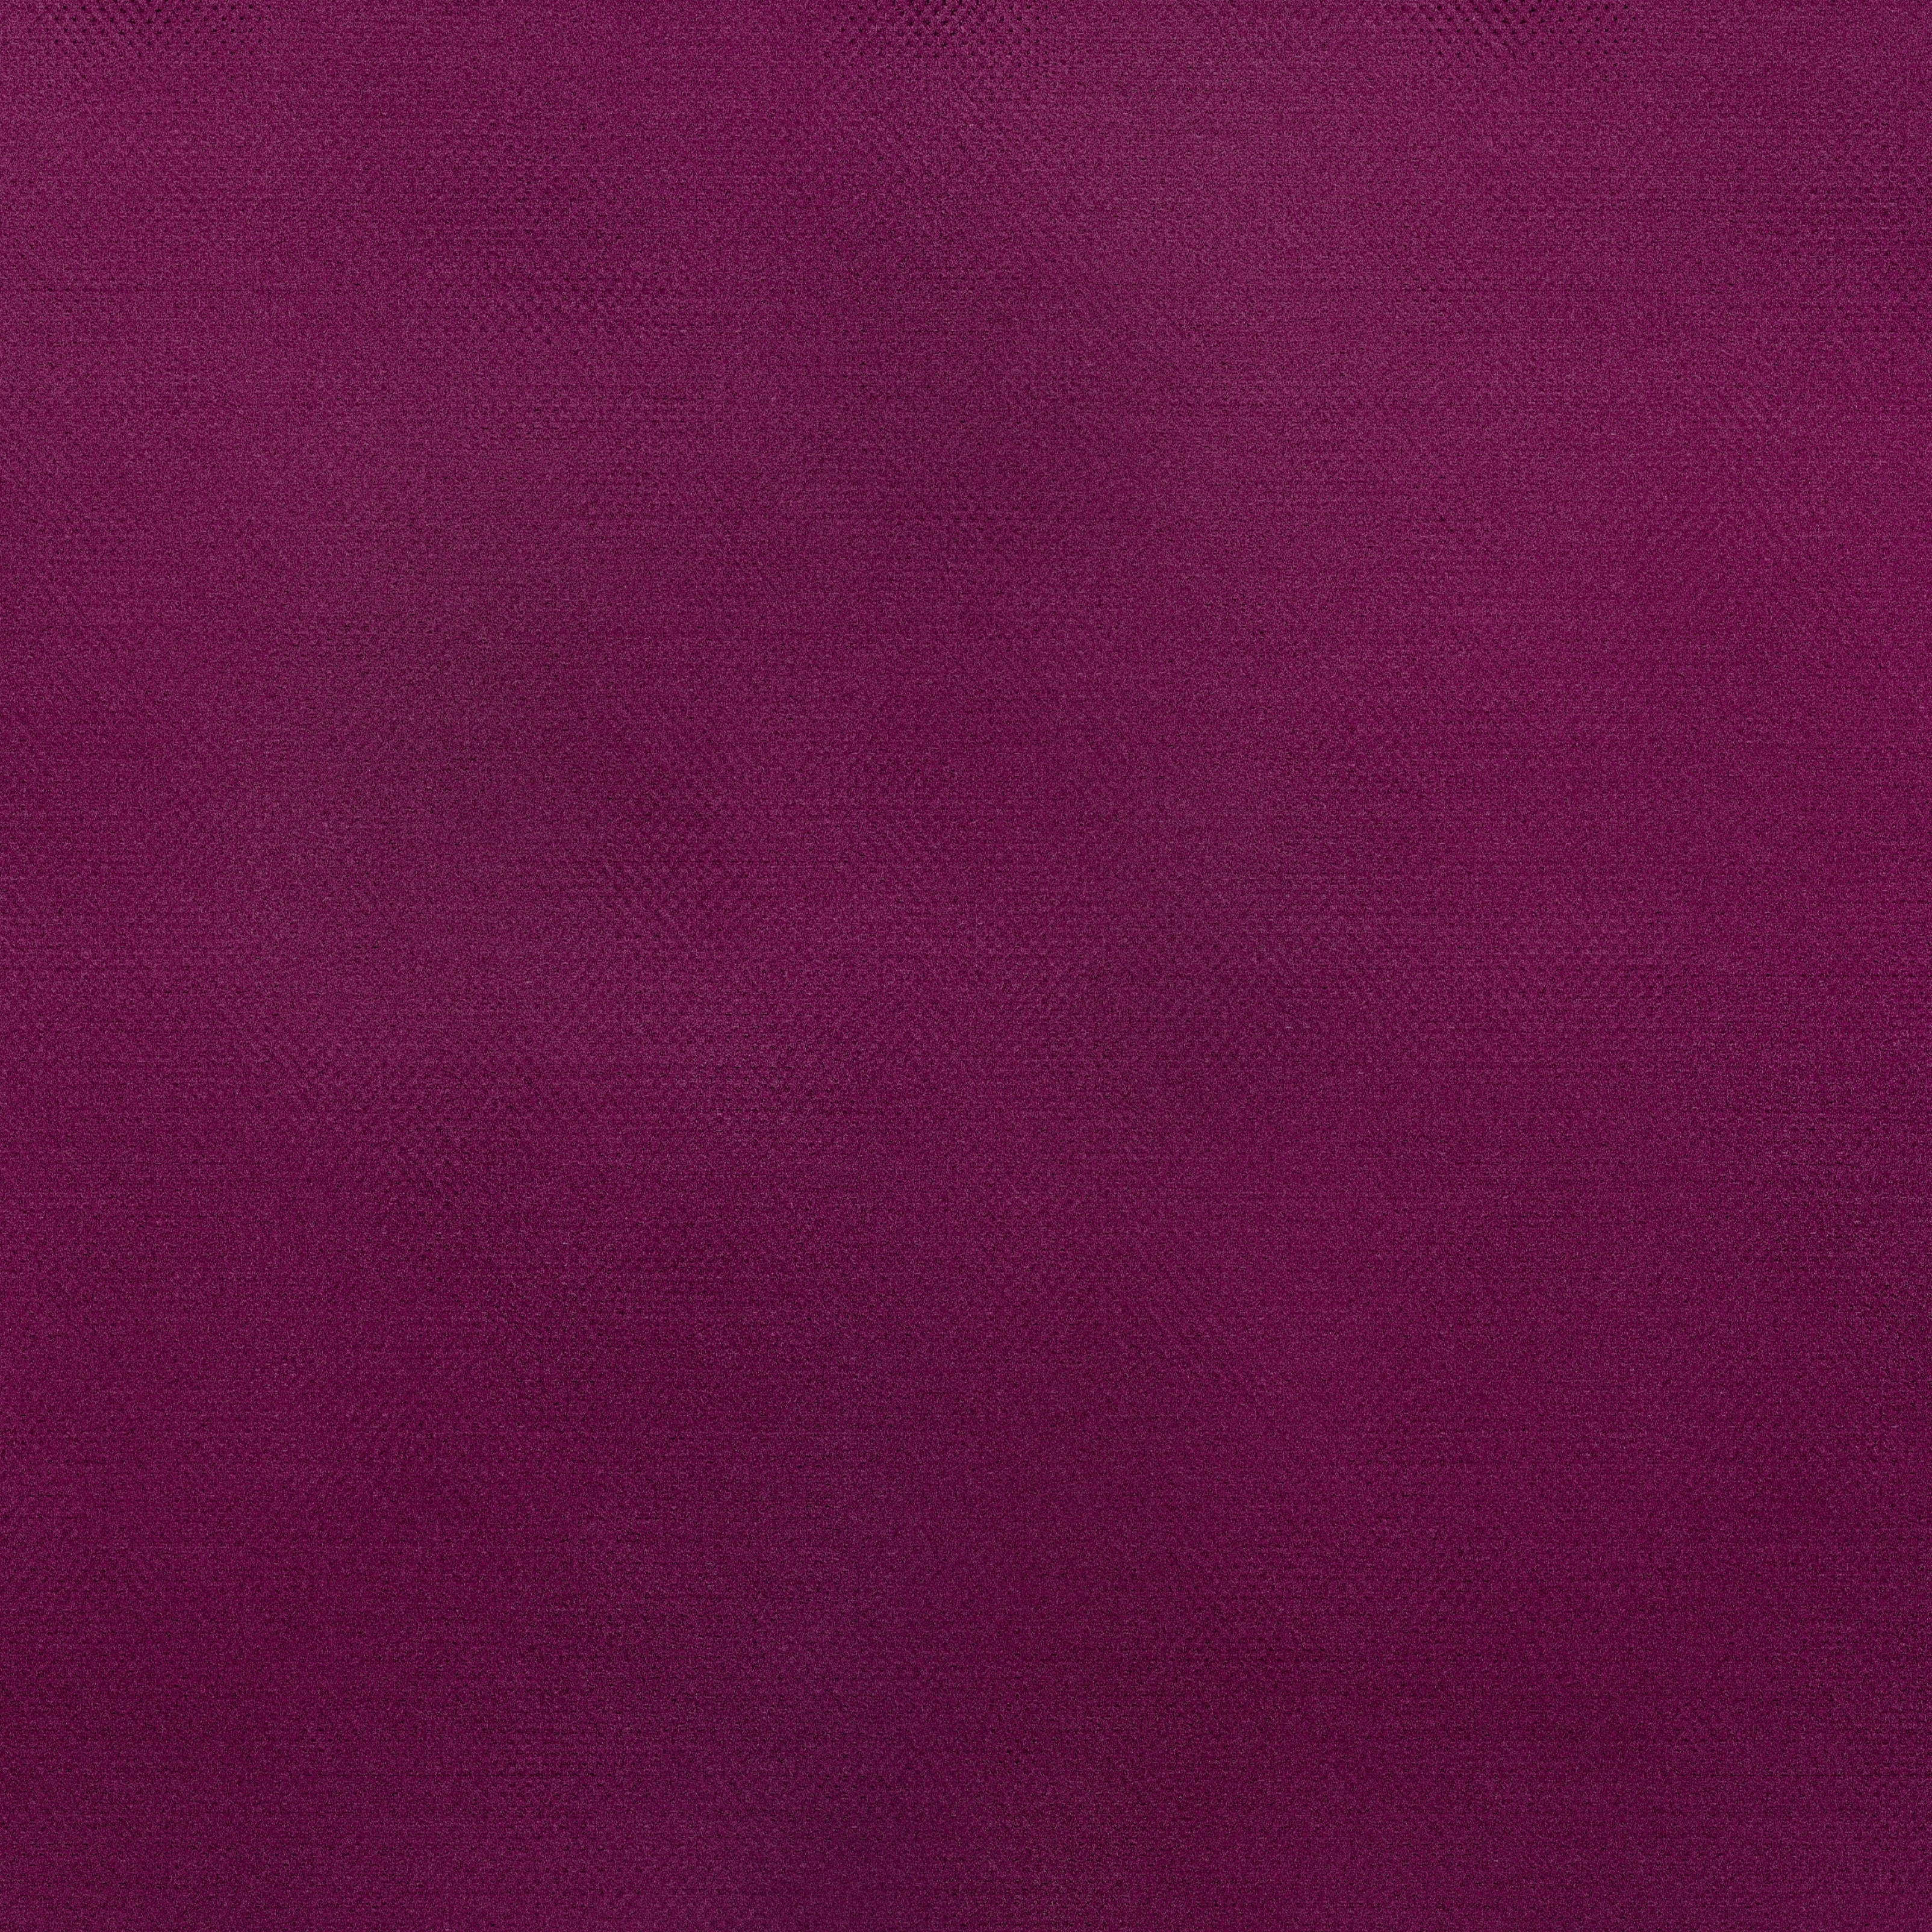 iPad Wallpapers Purple Velvet Fabric Cloth Pattern Texture iPad Wallpaper 3208x3208 px